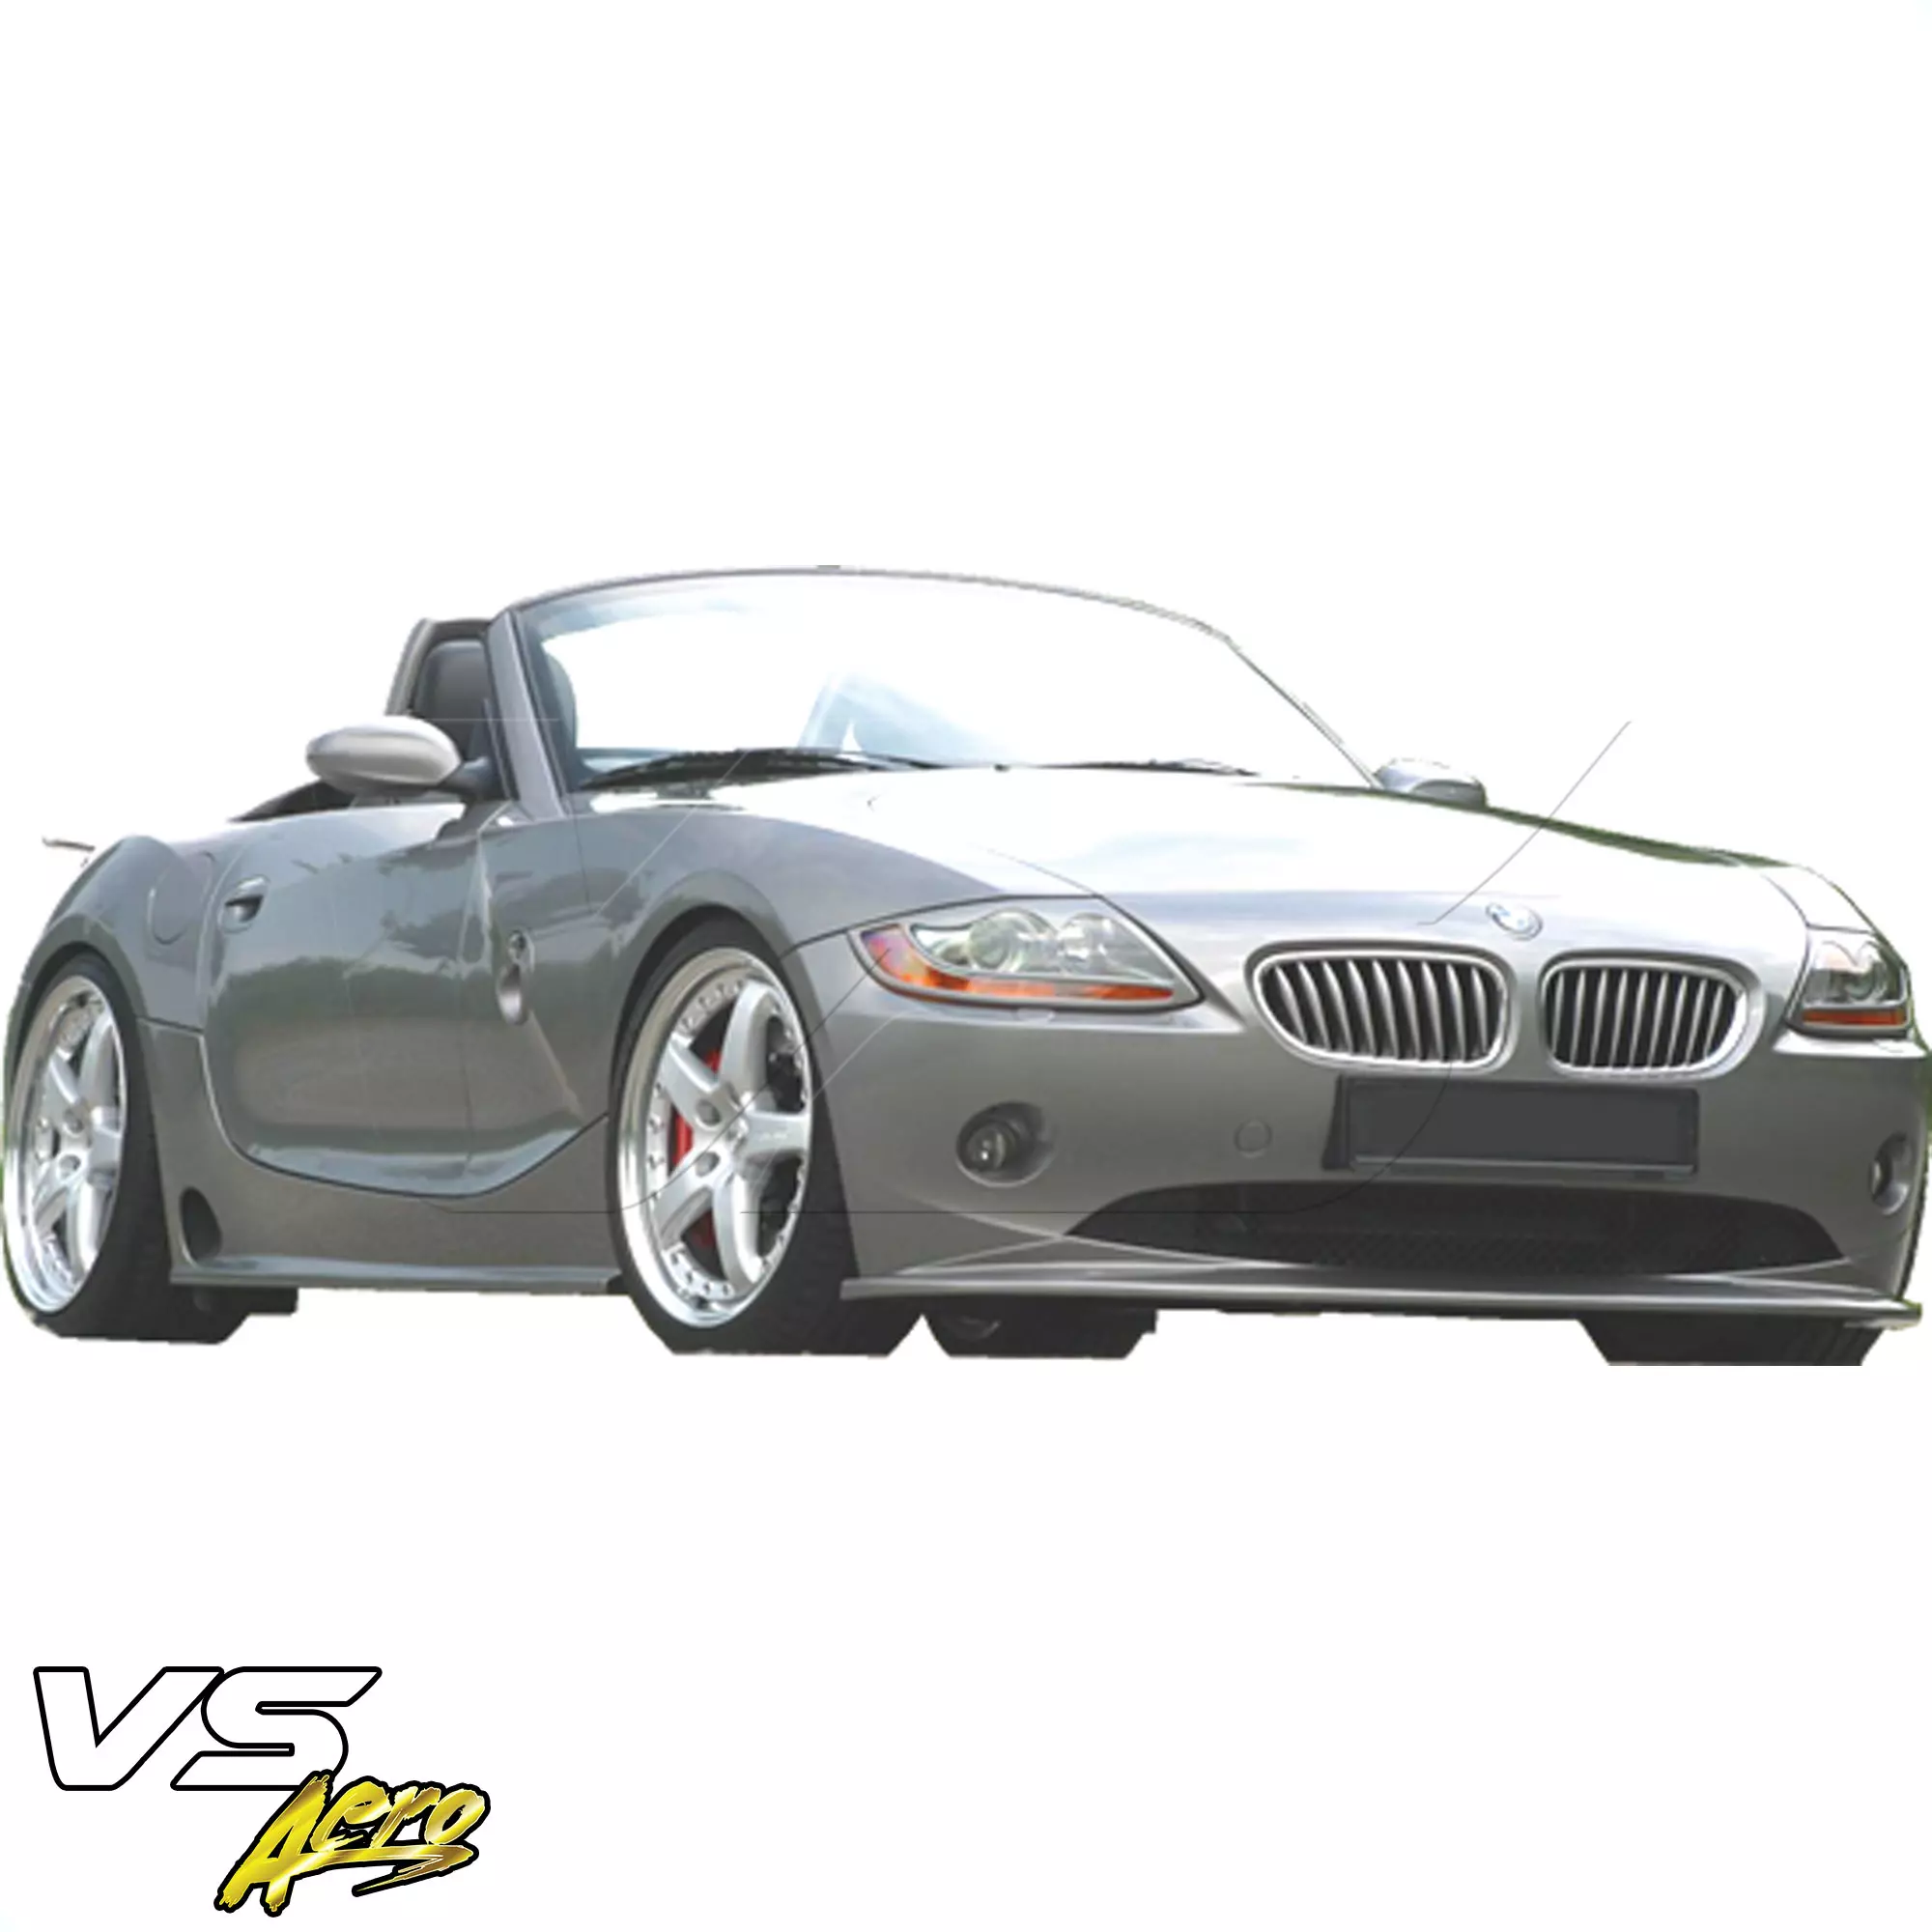 VSaero FRP HAMA Body Kit 4pc > BMW Z4 E85 2003-2005 - Image 9